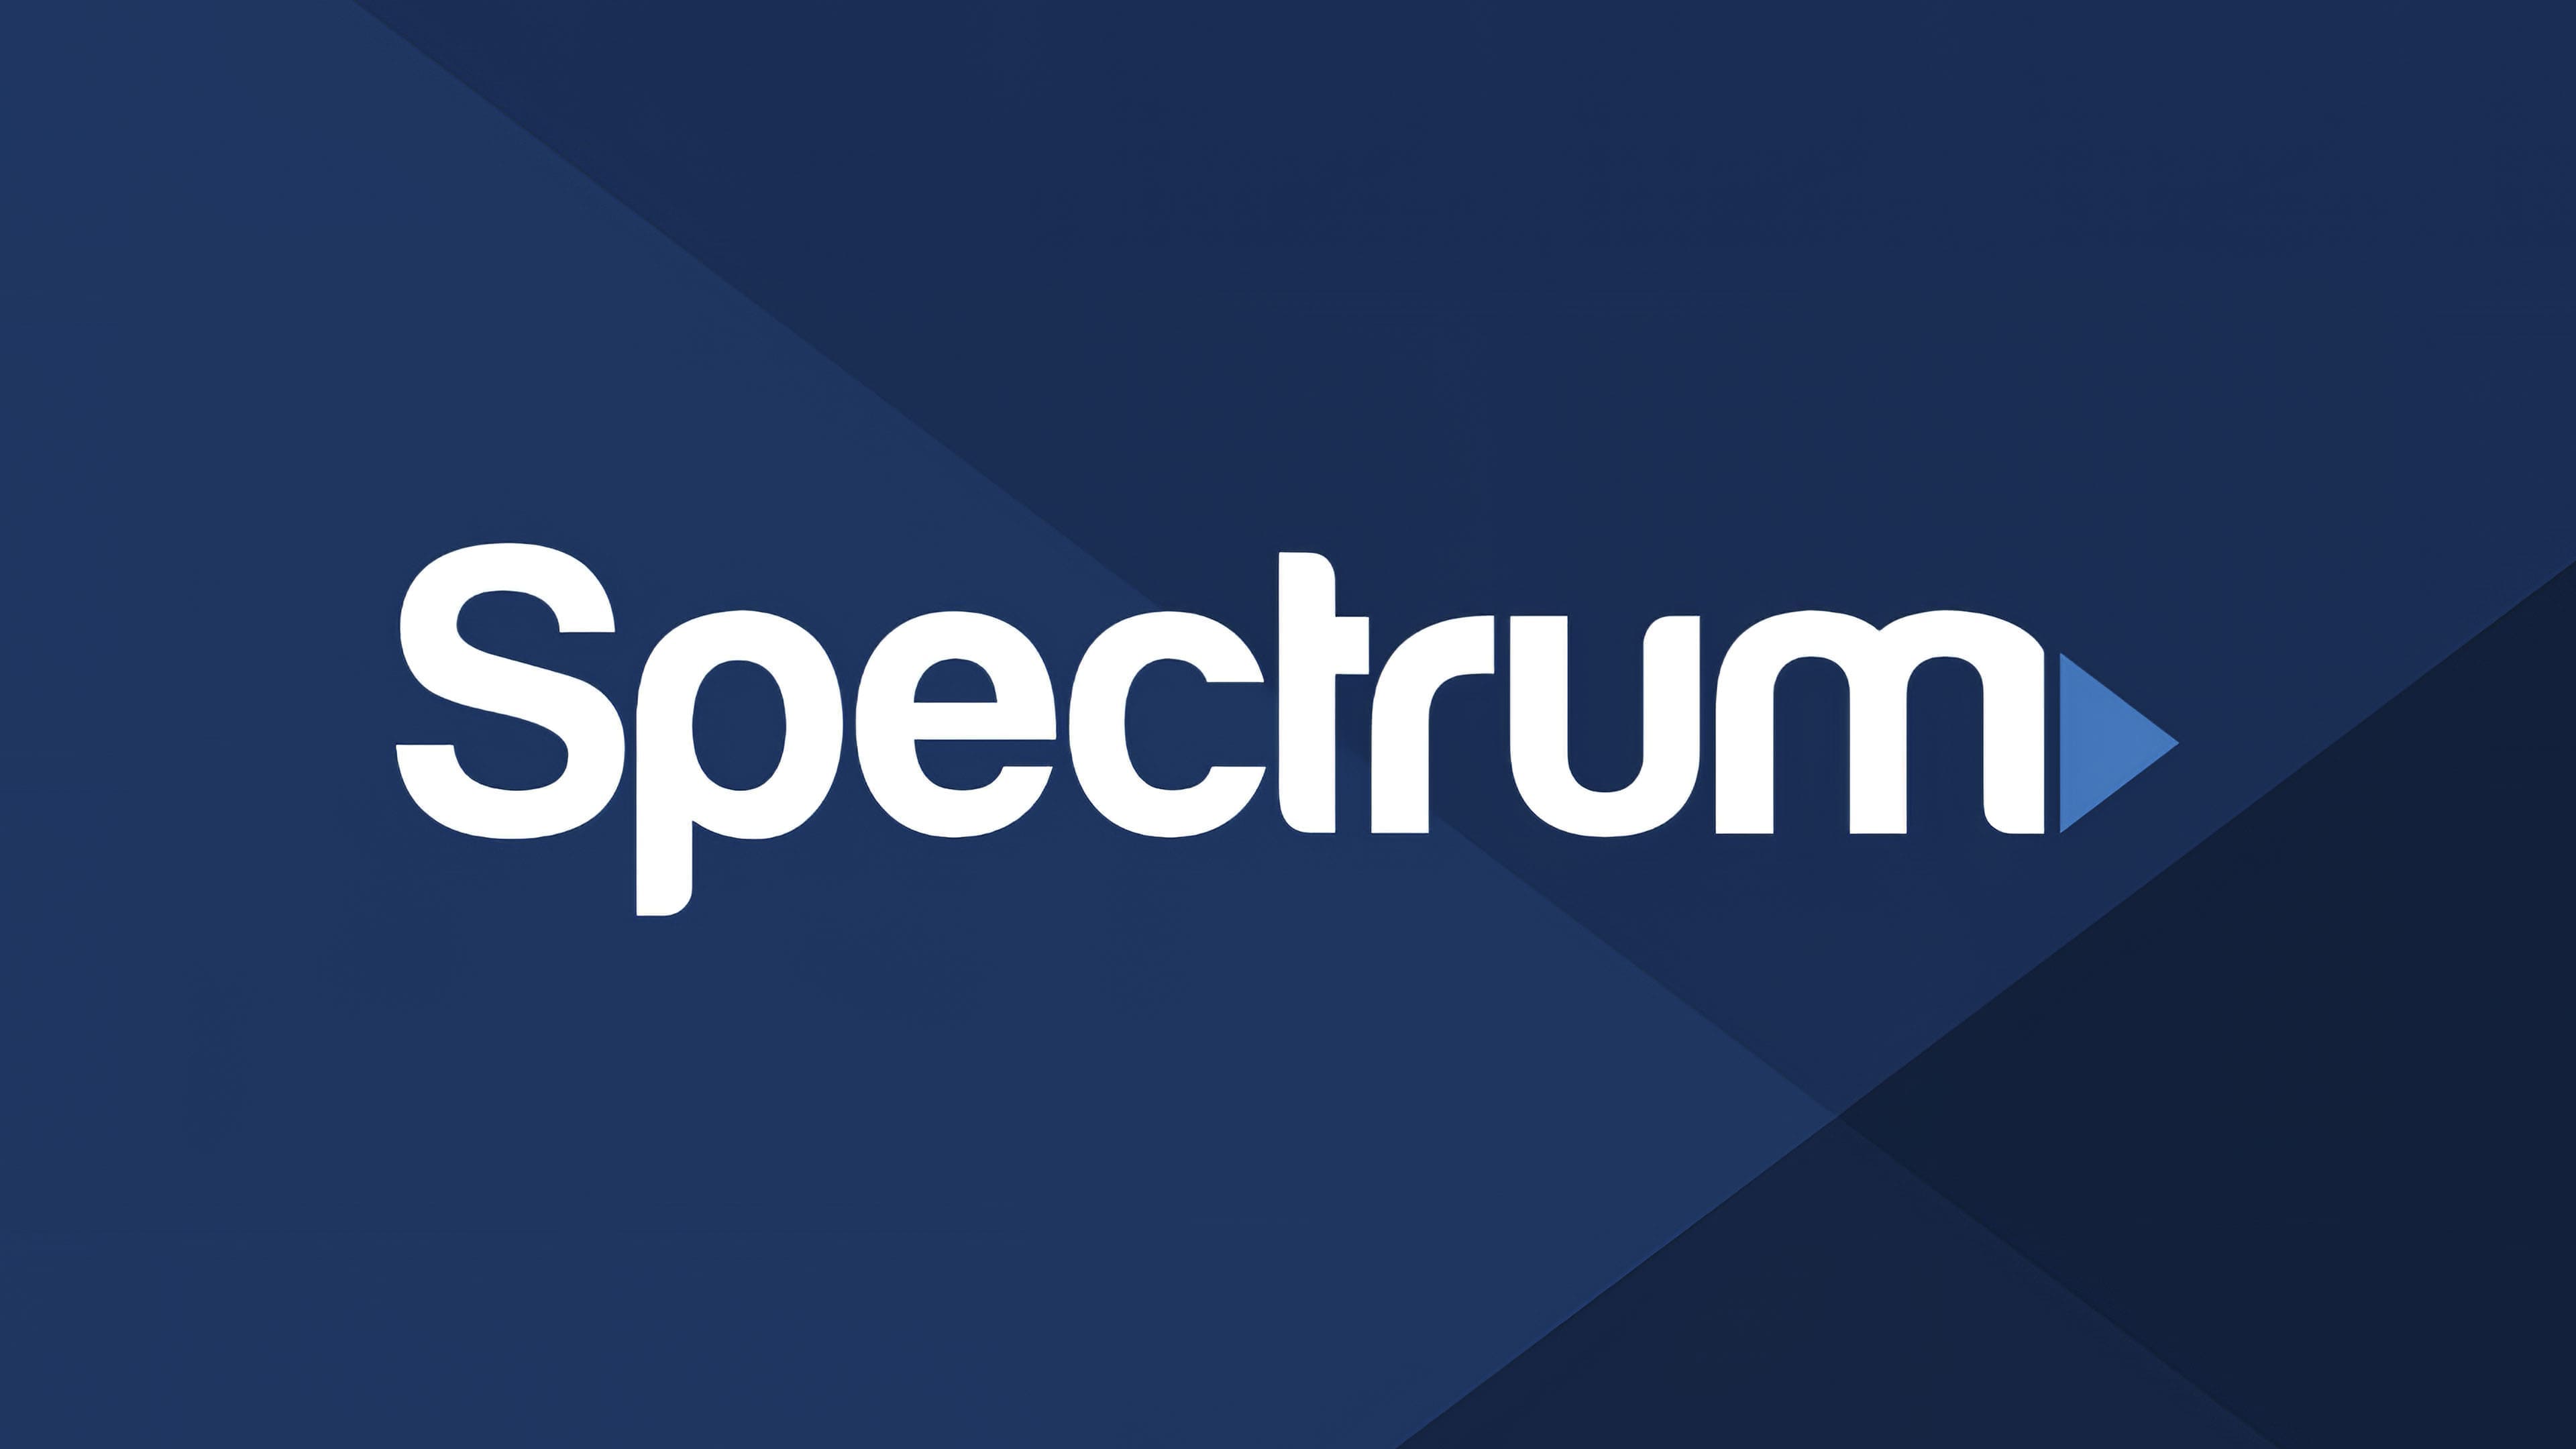 Charter Communications/Spectrum